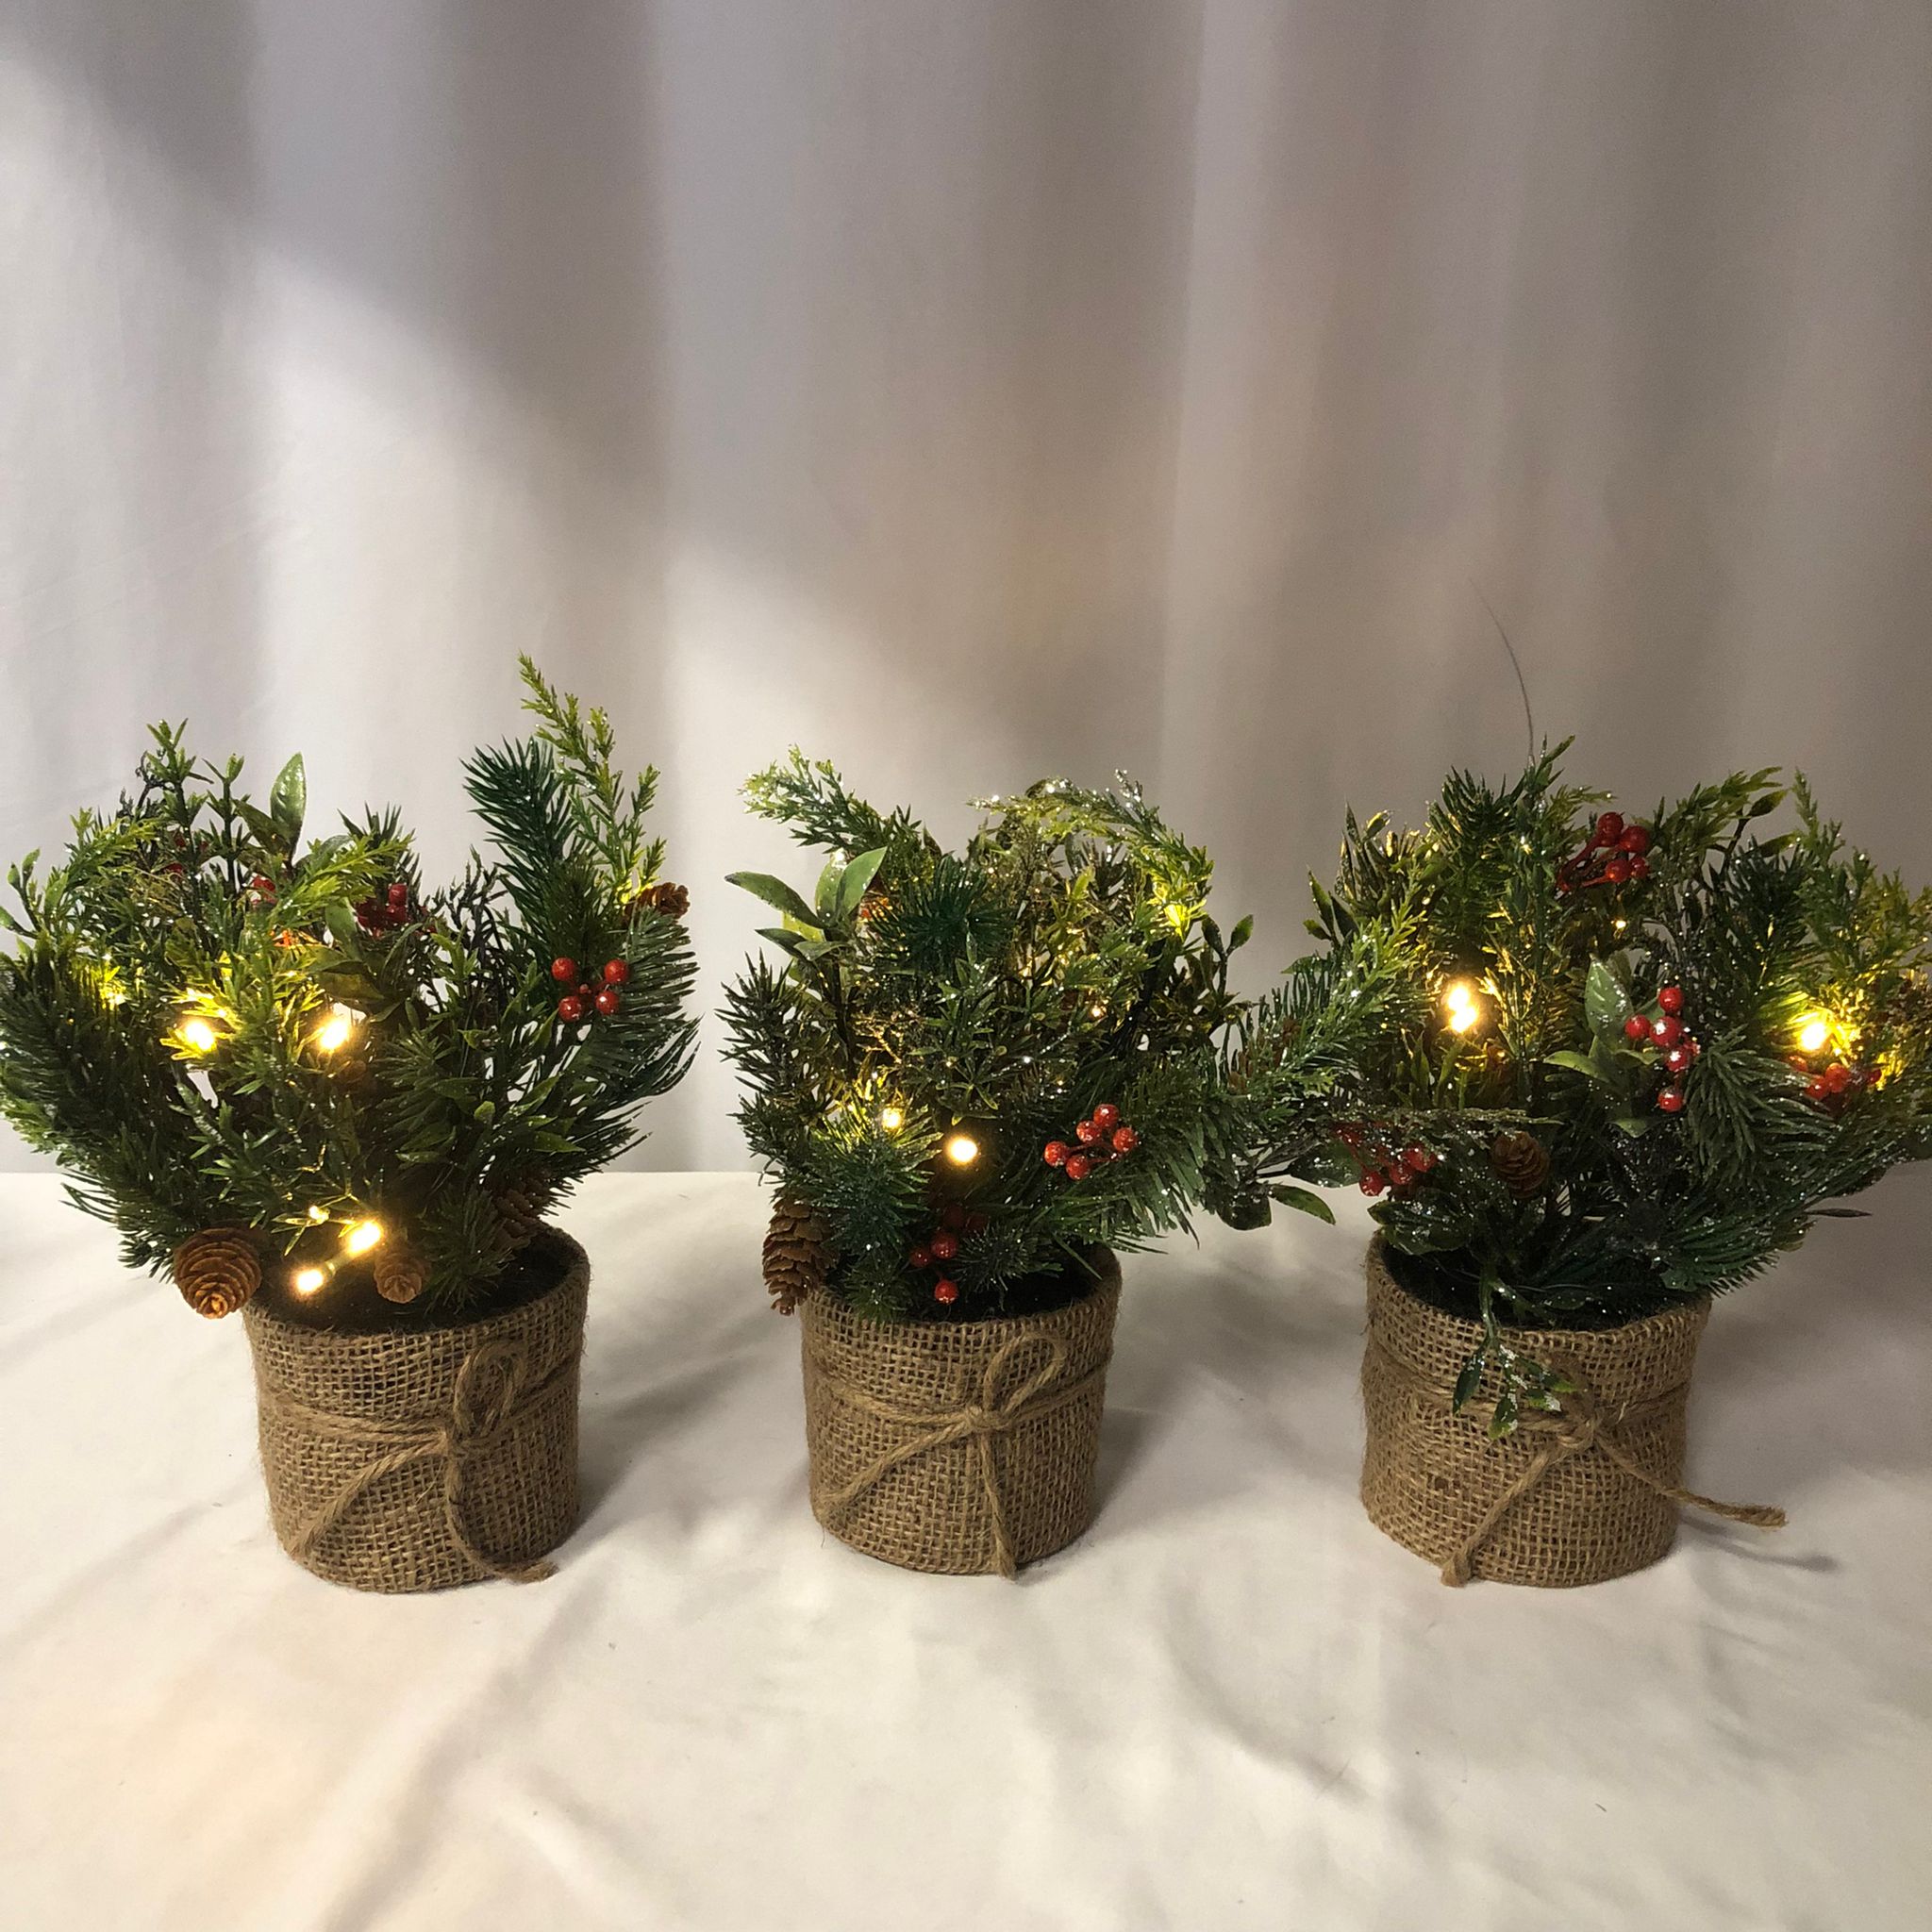 Set of 3 Mini Christmas Greens in Pots